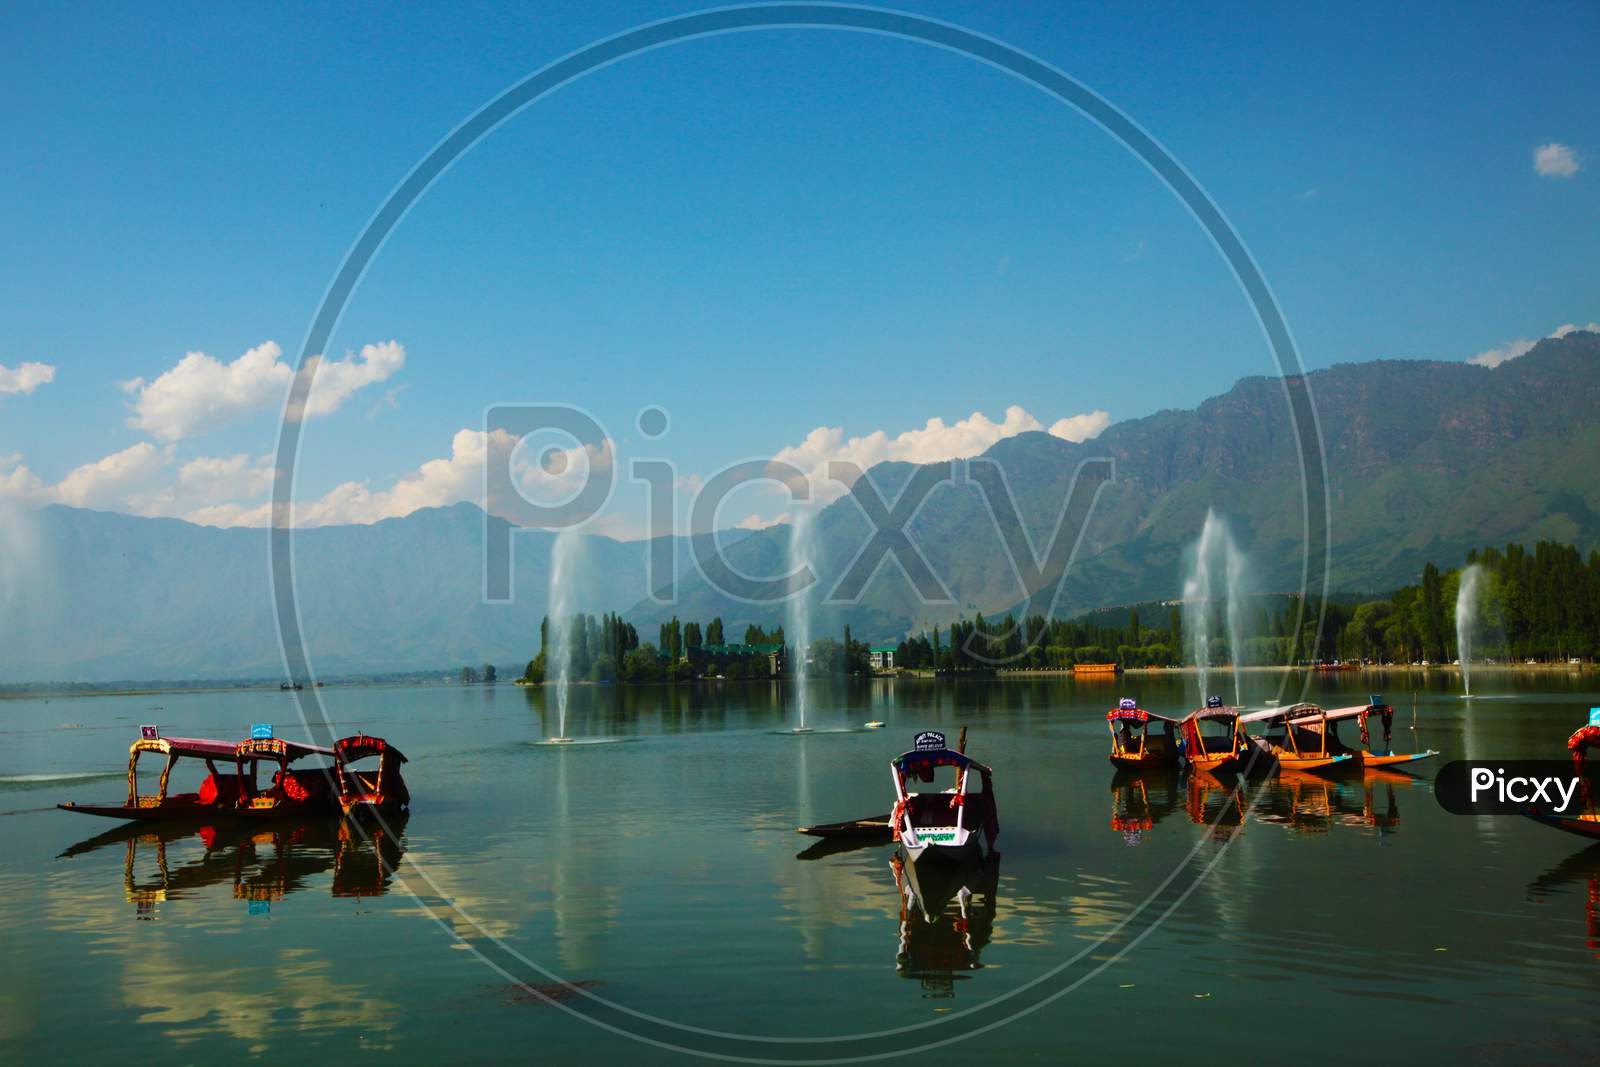 Shikara boats in Dal lake